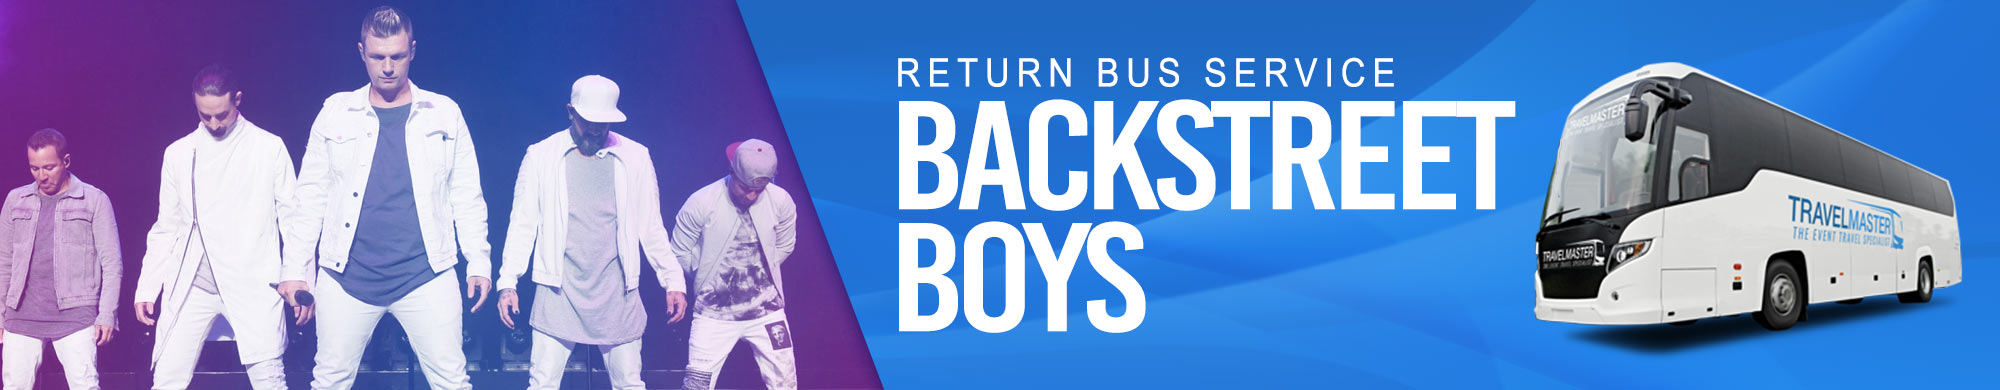 Bus to Backstreet Boys